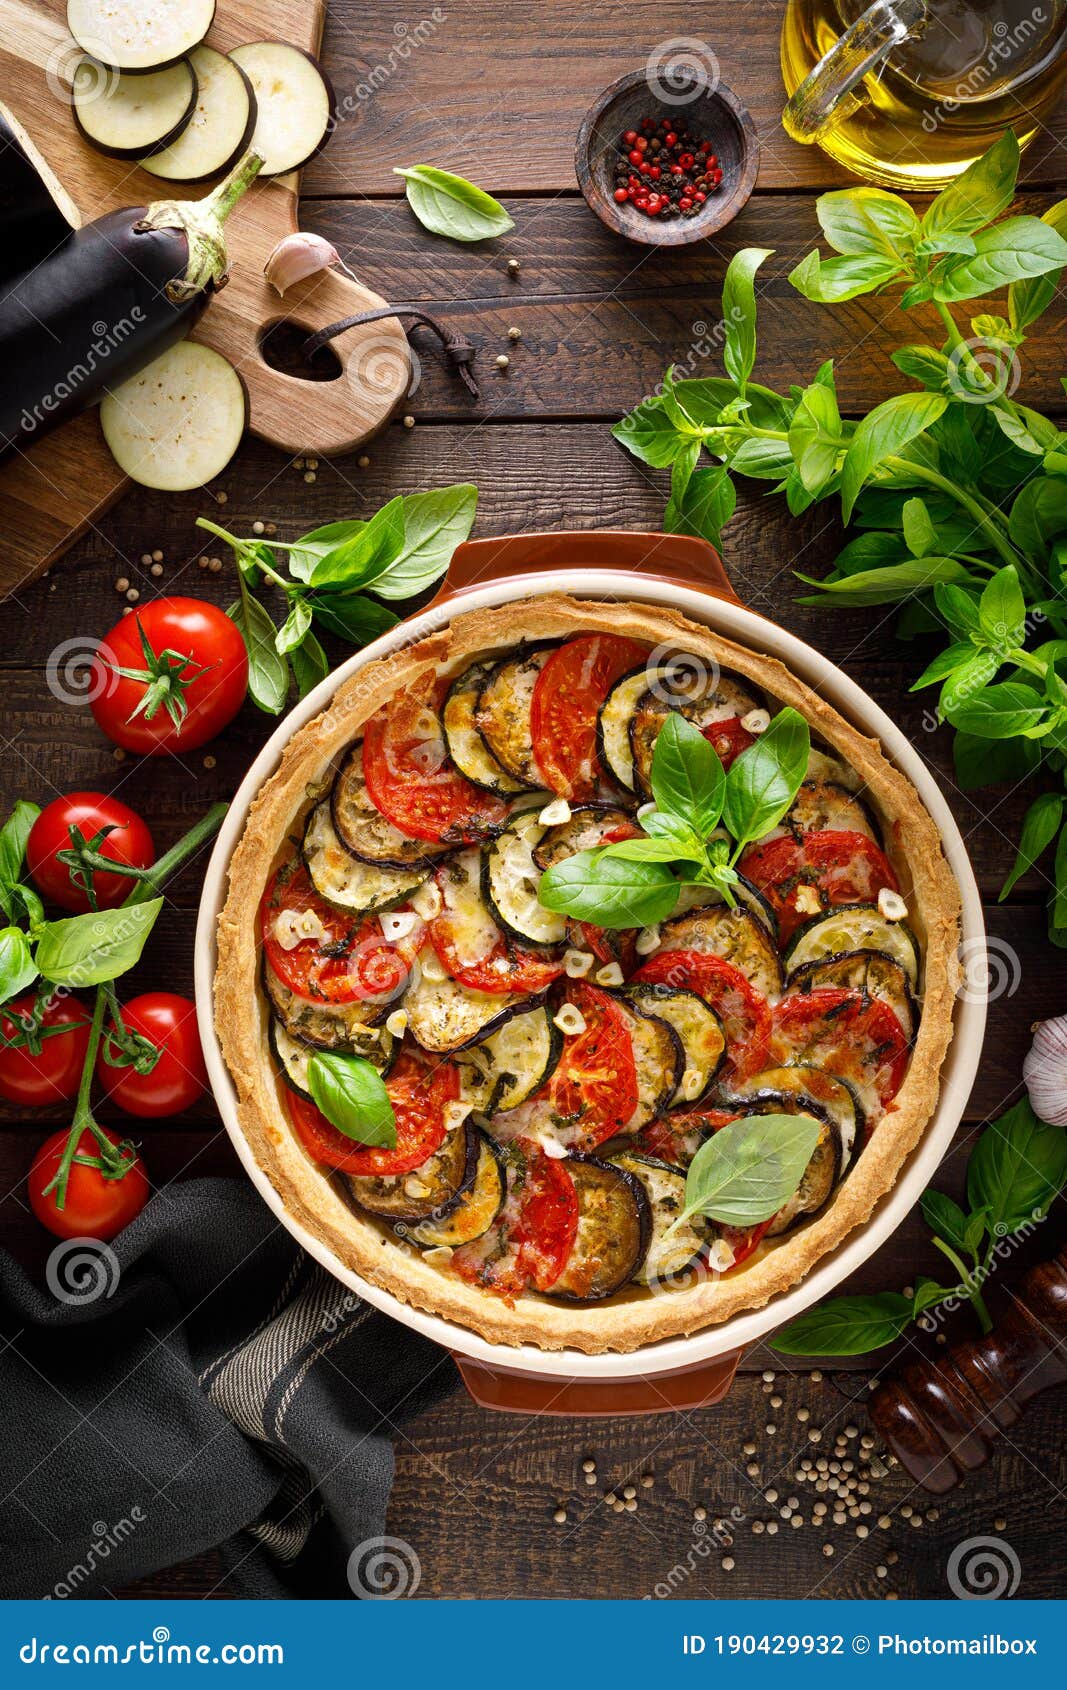 tart with vegetables. homemade savory tart with eggplant, zucchini, tomatoes, garlic, mozzarella cheese and fresh basil. mediterra